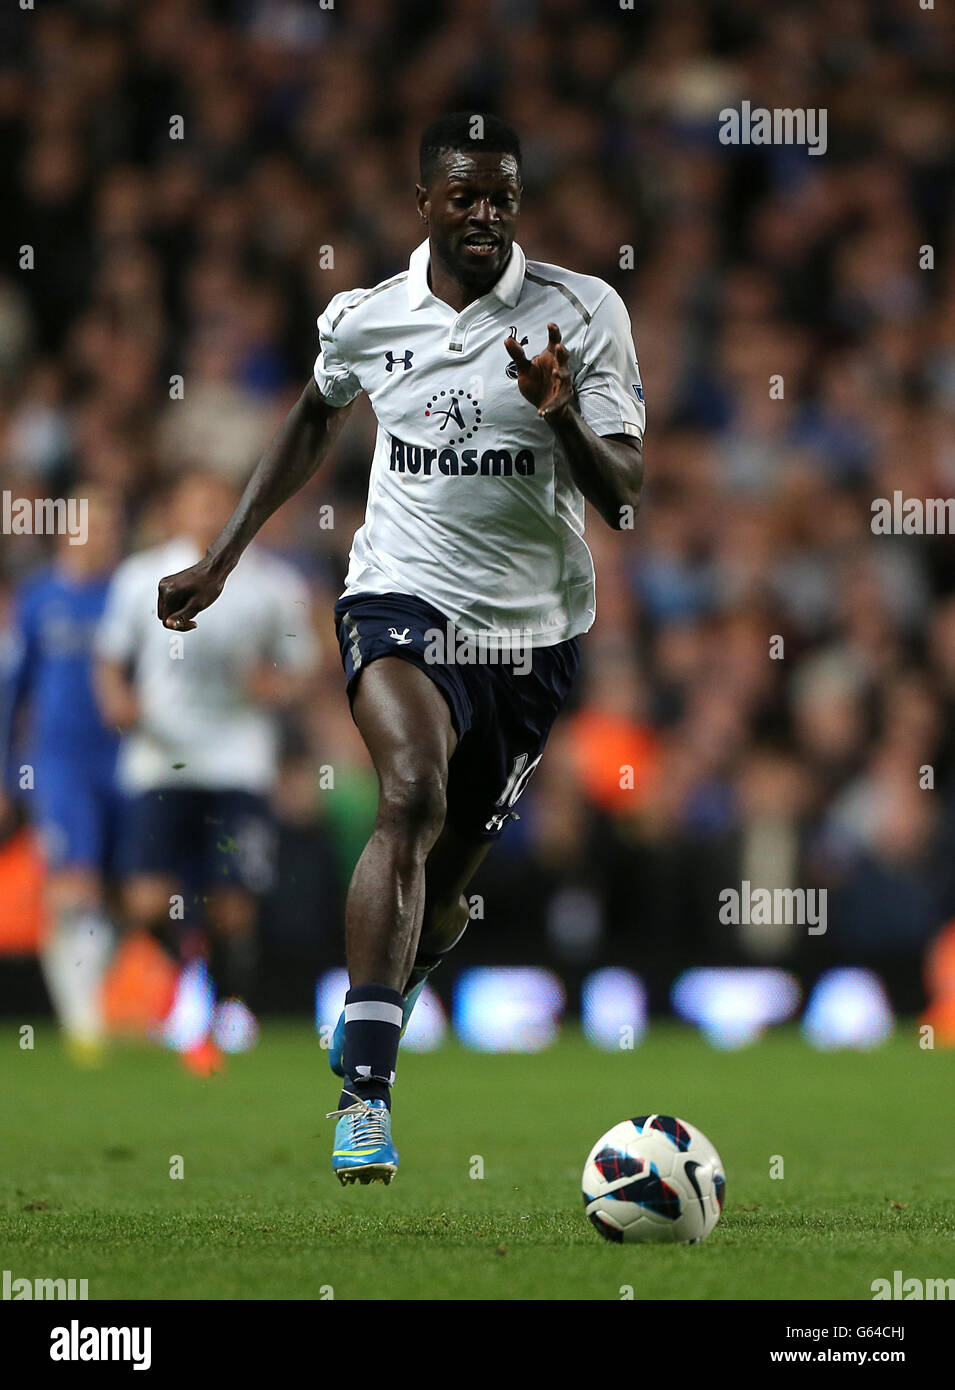 Fußball - Barclays Premier League - Chelsea gegen Tottenham Hotspur - Stamford Bridge. Emmanuel Adebayor, Tottenham Hotspur Stockfoto